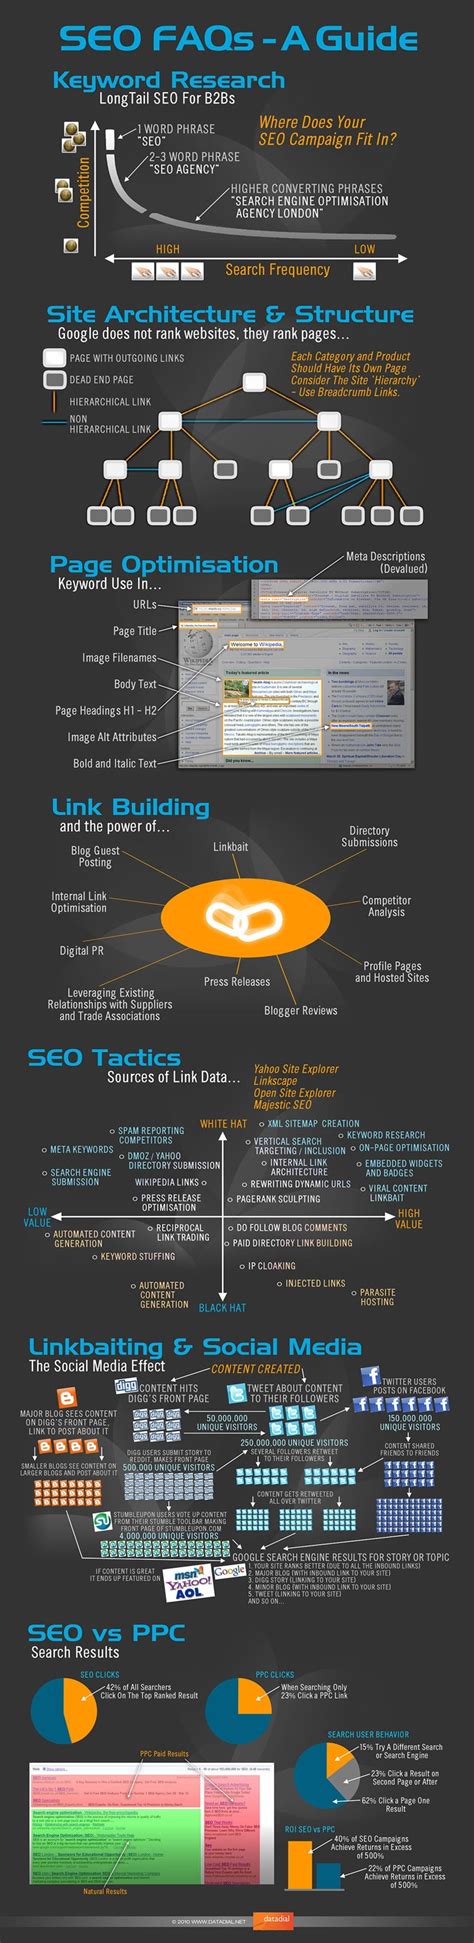 seo faq seo guide infographic marketing seo techniques